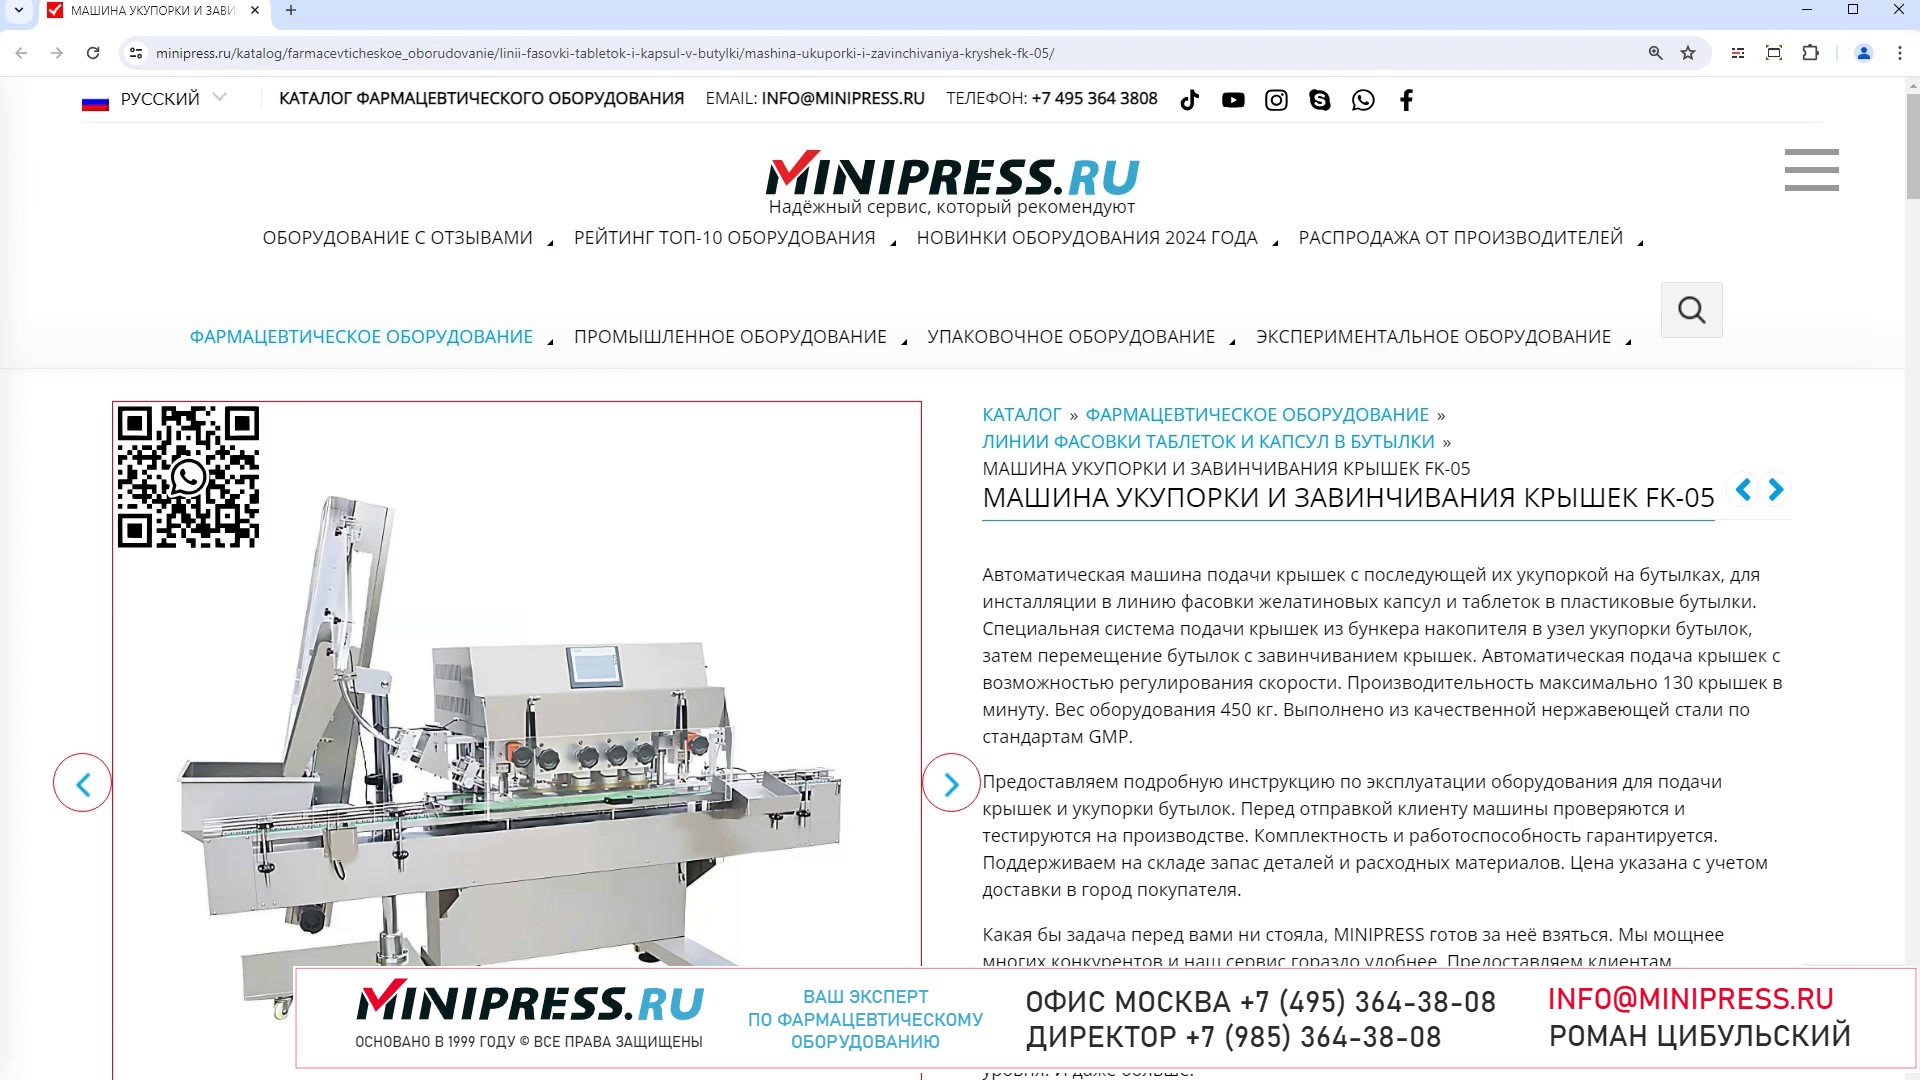 Minipress.ru Машина укупорки и завинчивания крышек FK-05